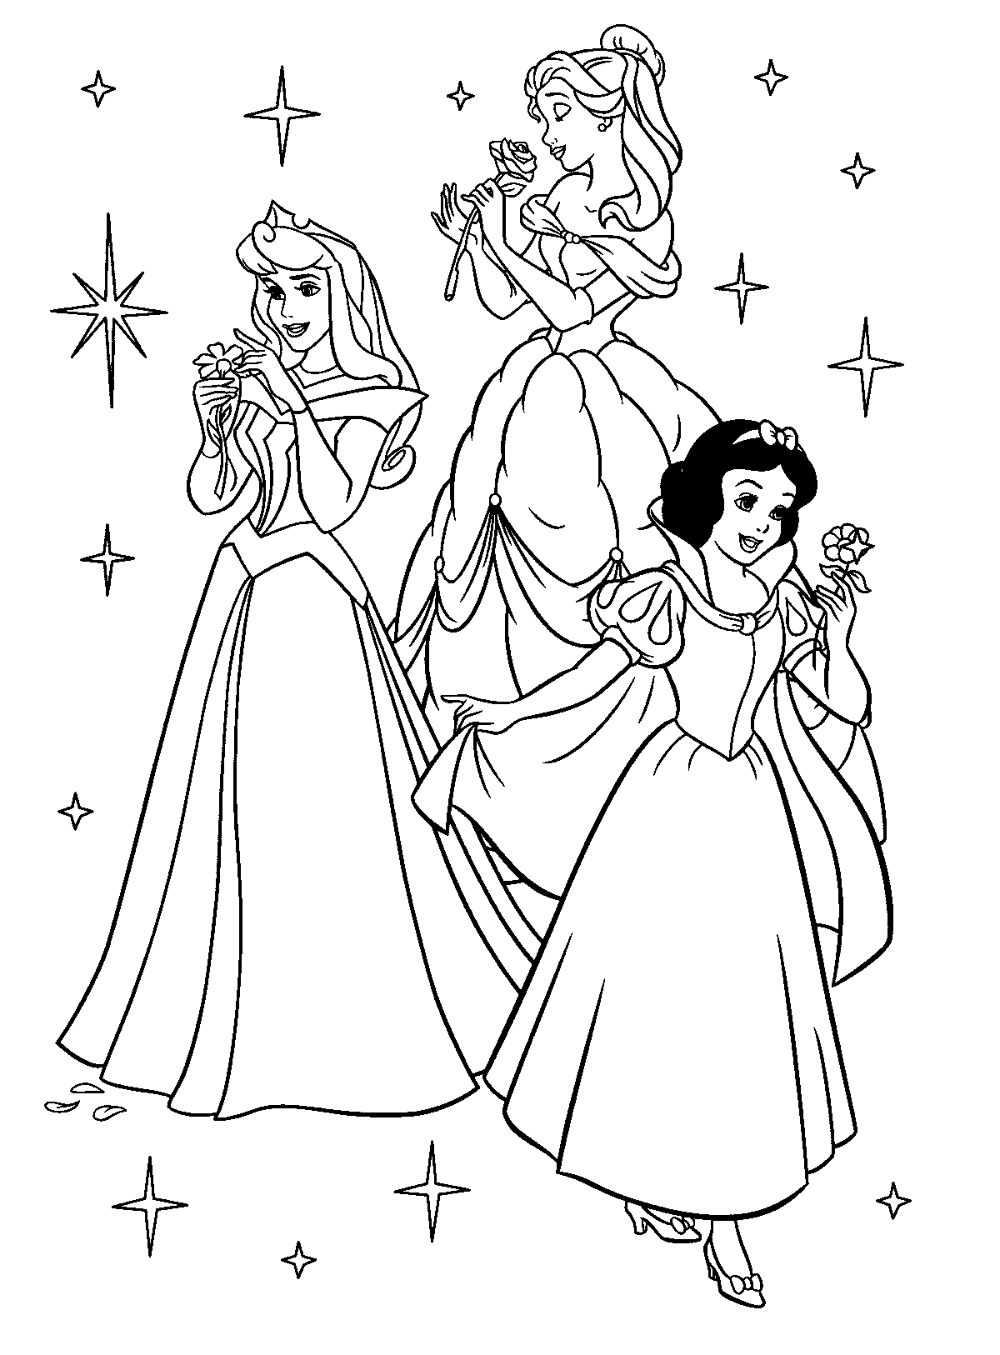 Free printable disney princess coloring pages for kids princess coloring pages disney princess coloring pages disney princess colors